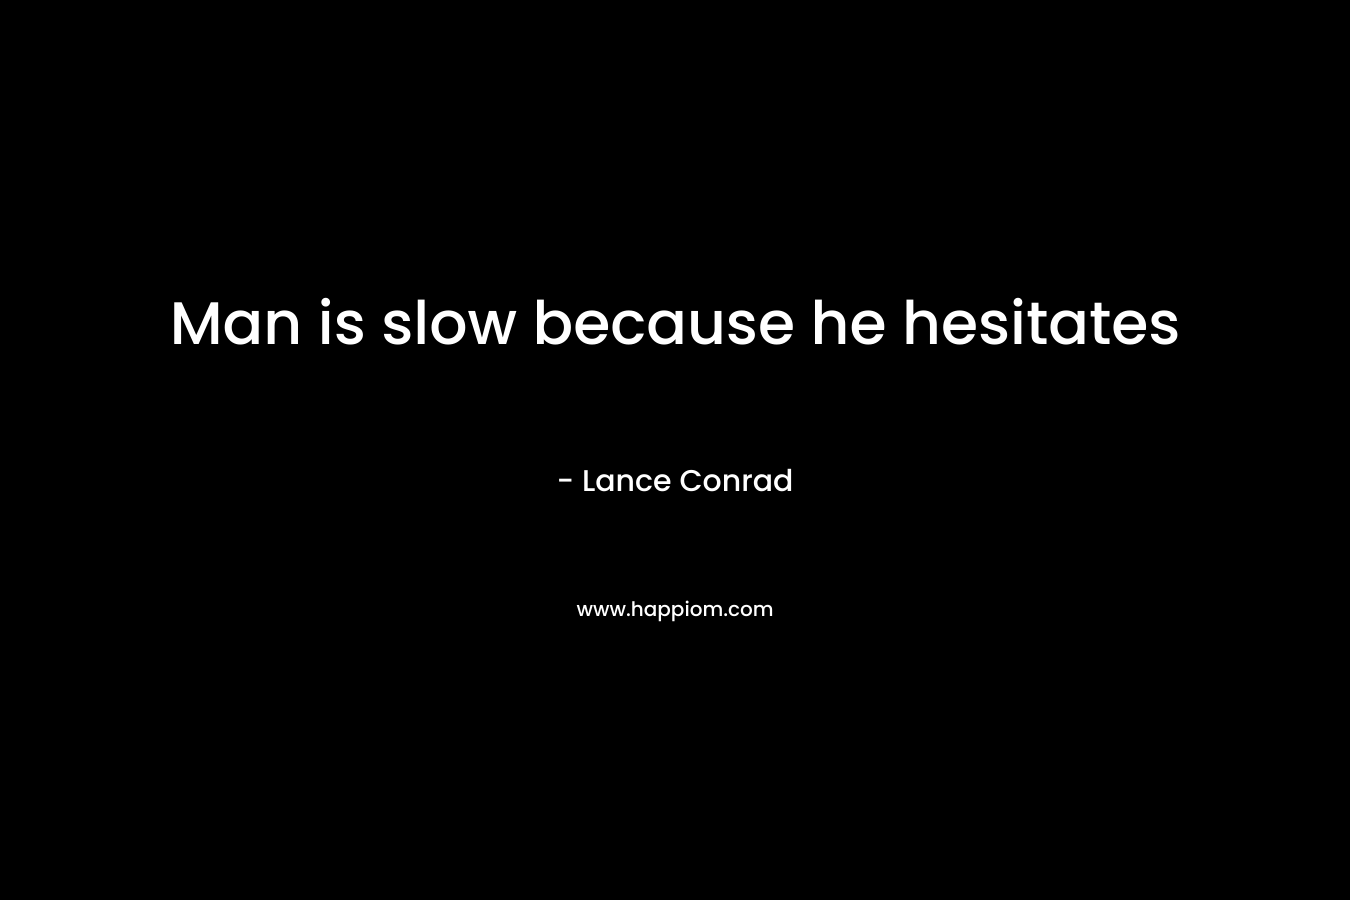 Man is slow because he hesitates